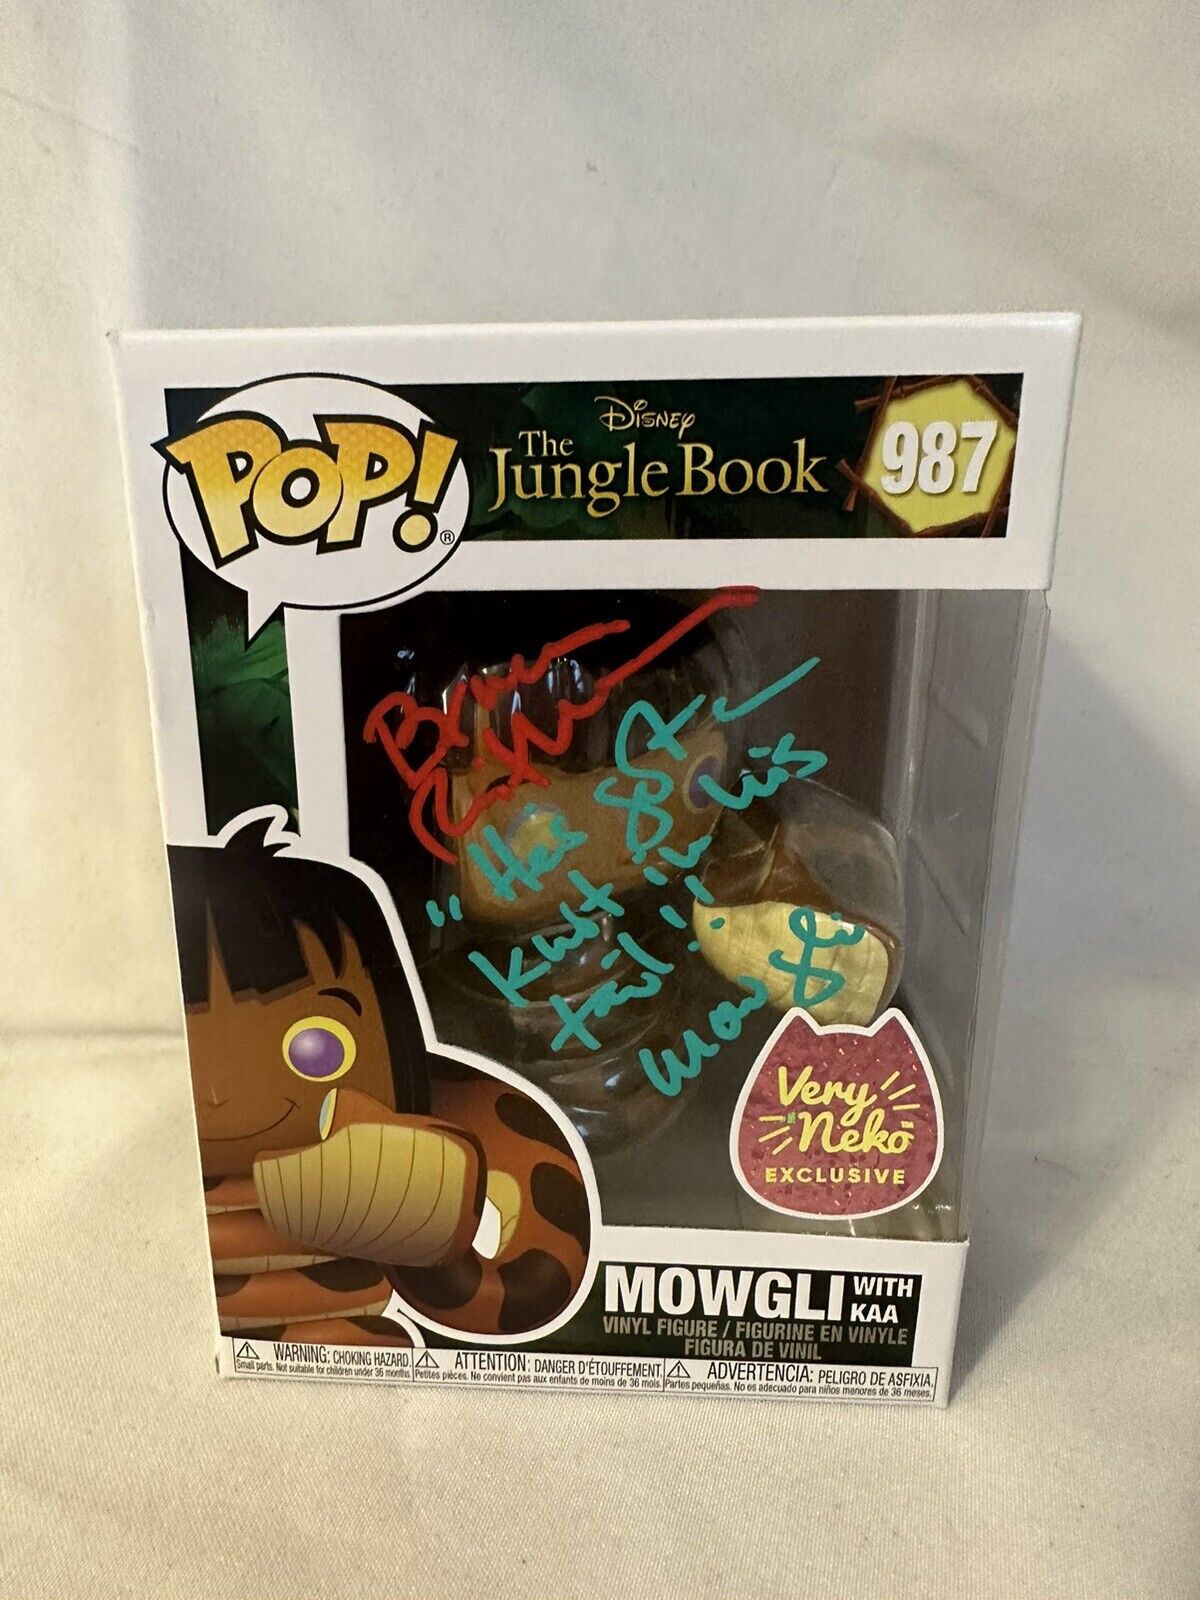 Bruce Reitherman Signed Mowgli Disney Funko Pop Jungle Book 987 Inscribed OC COA